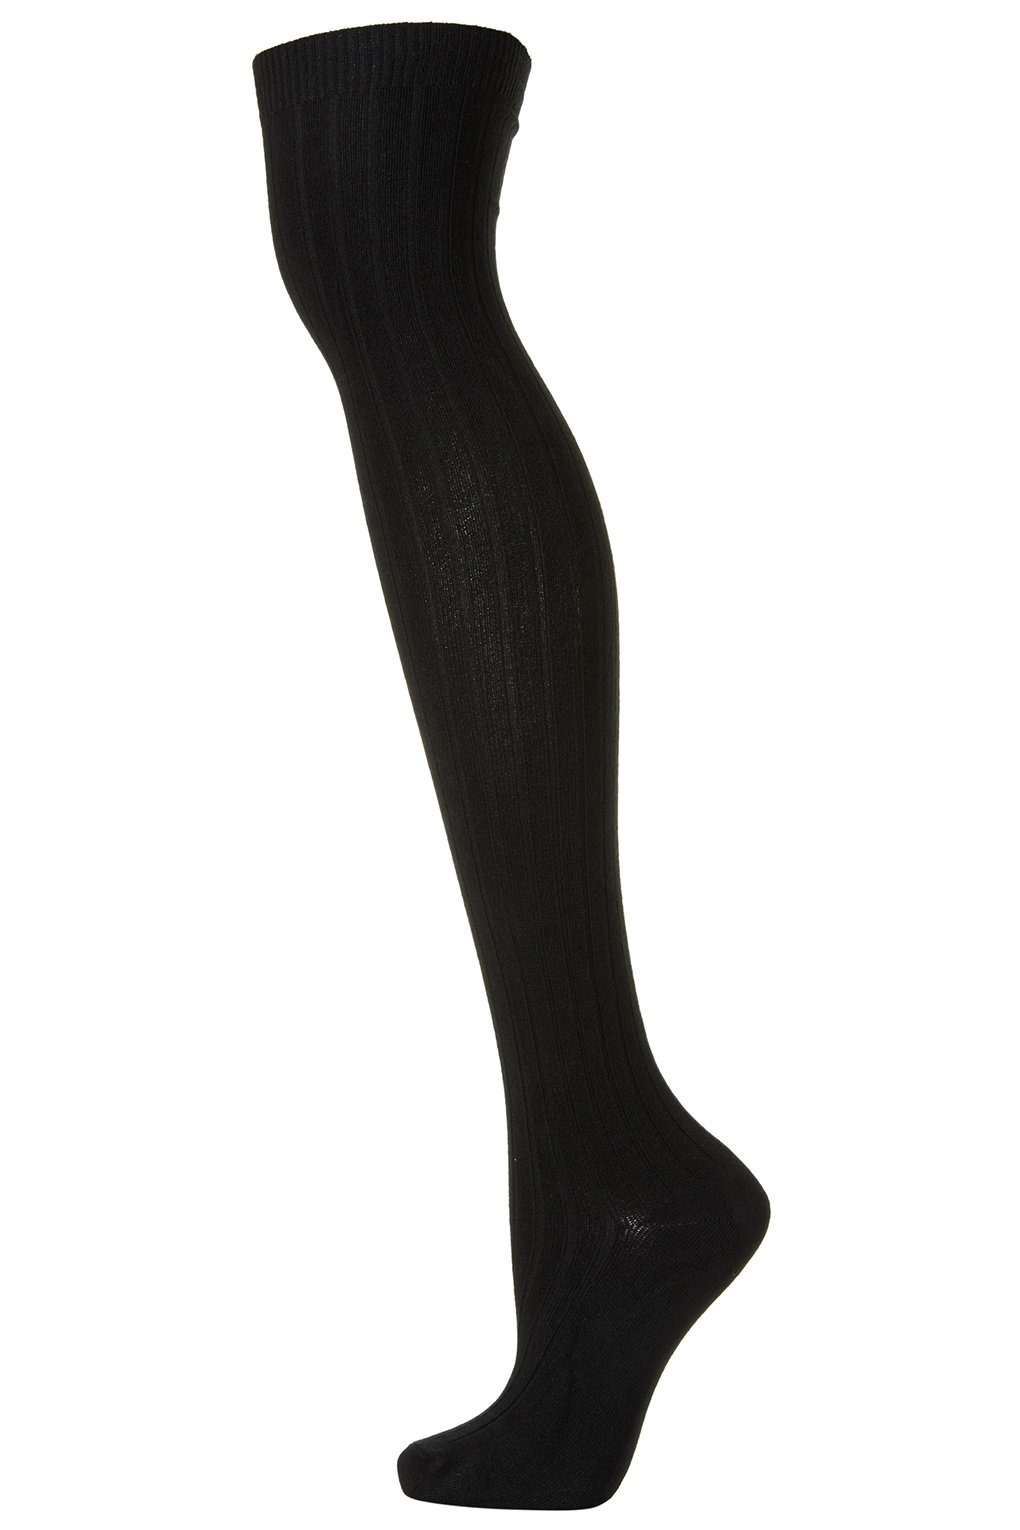 Hue 'Ultra' Wide Waistband Leggings (Regular & Plus Size)